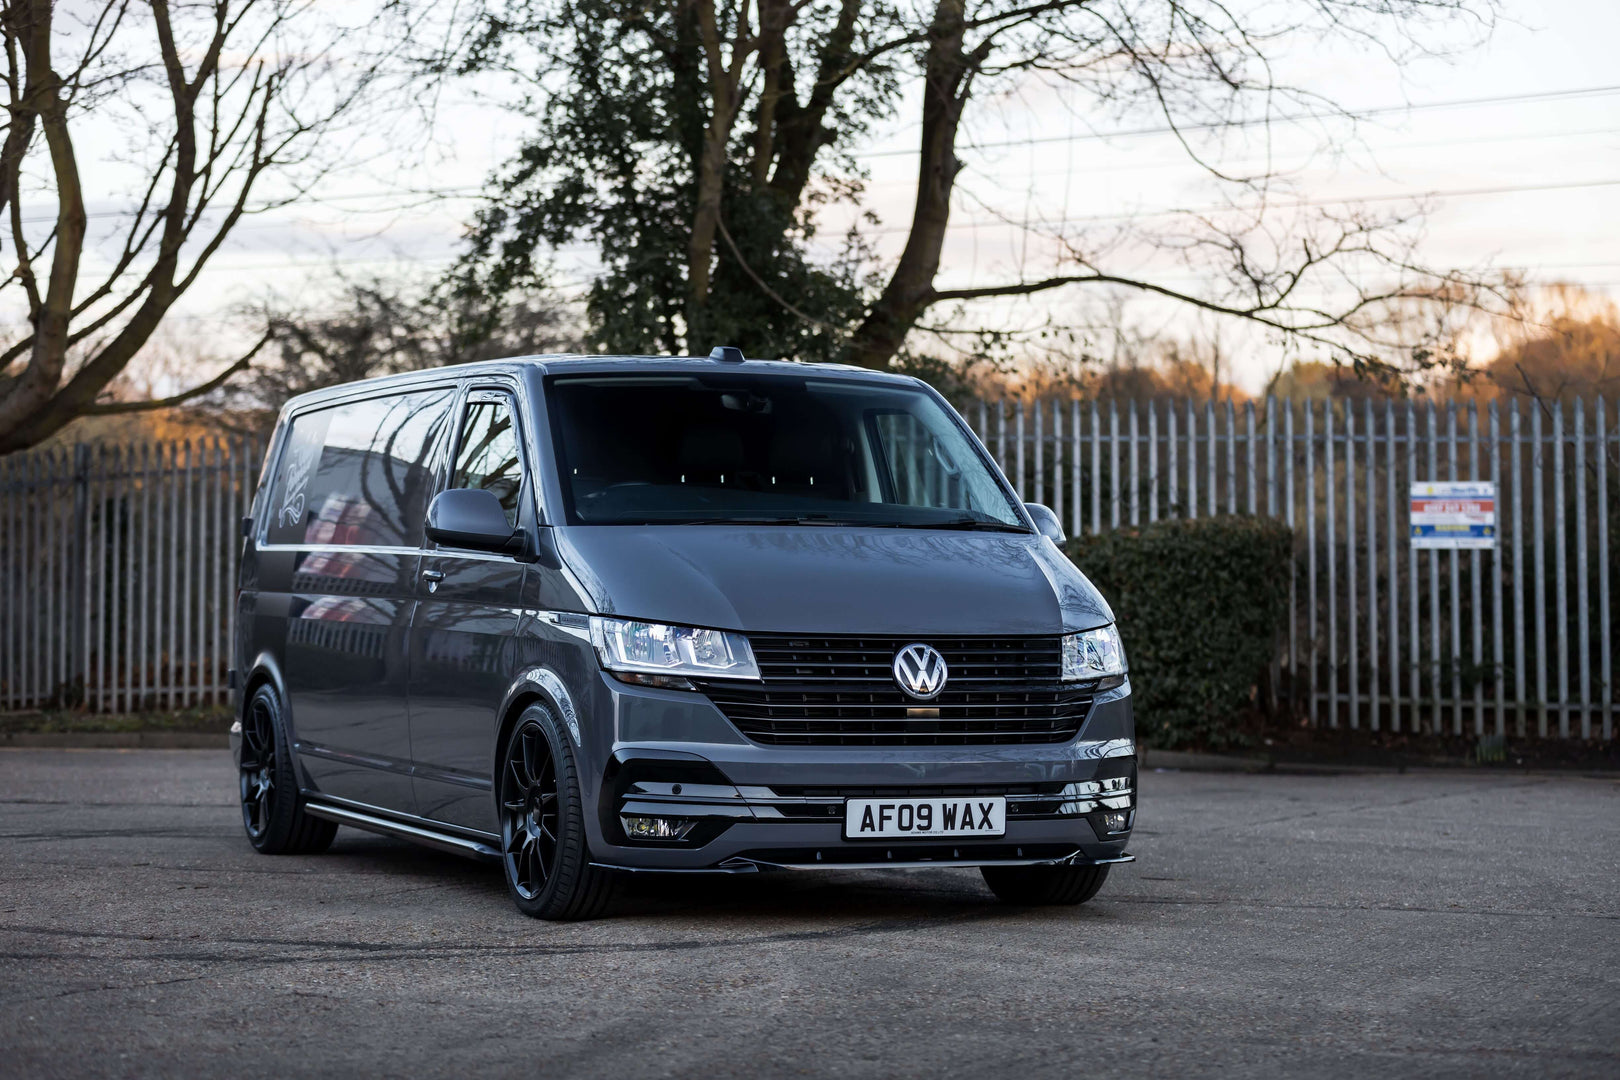 ABT Reveals its Latest Tuning Take on Volkswagen's T5 Passenger Van